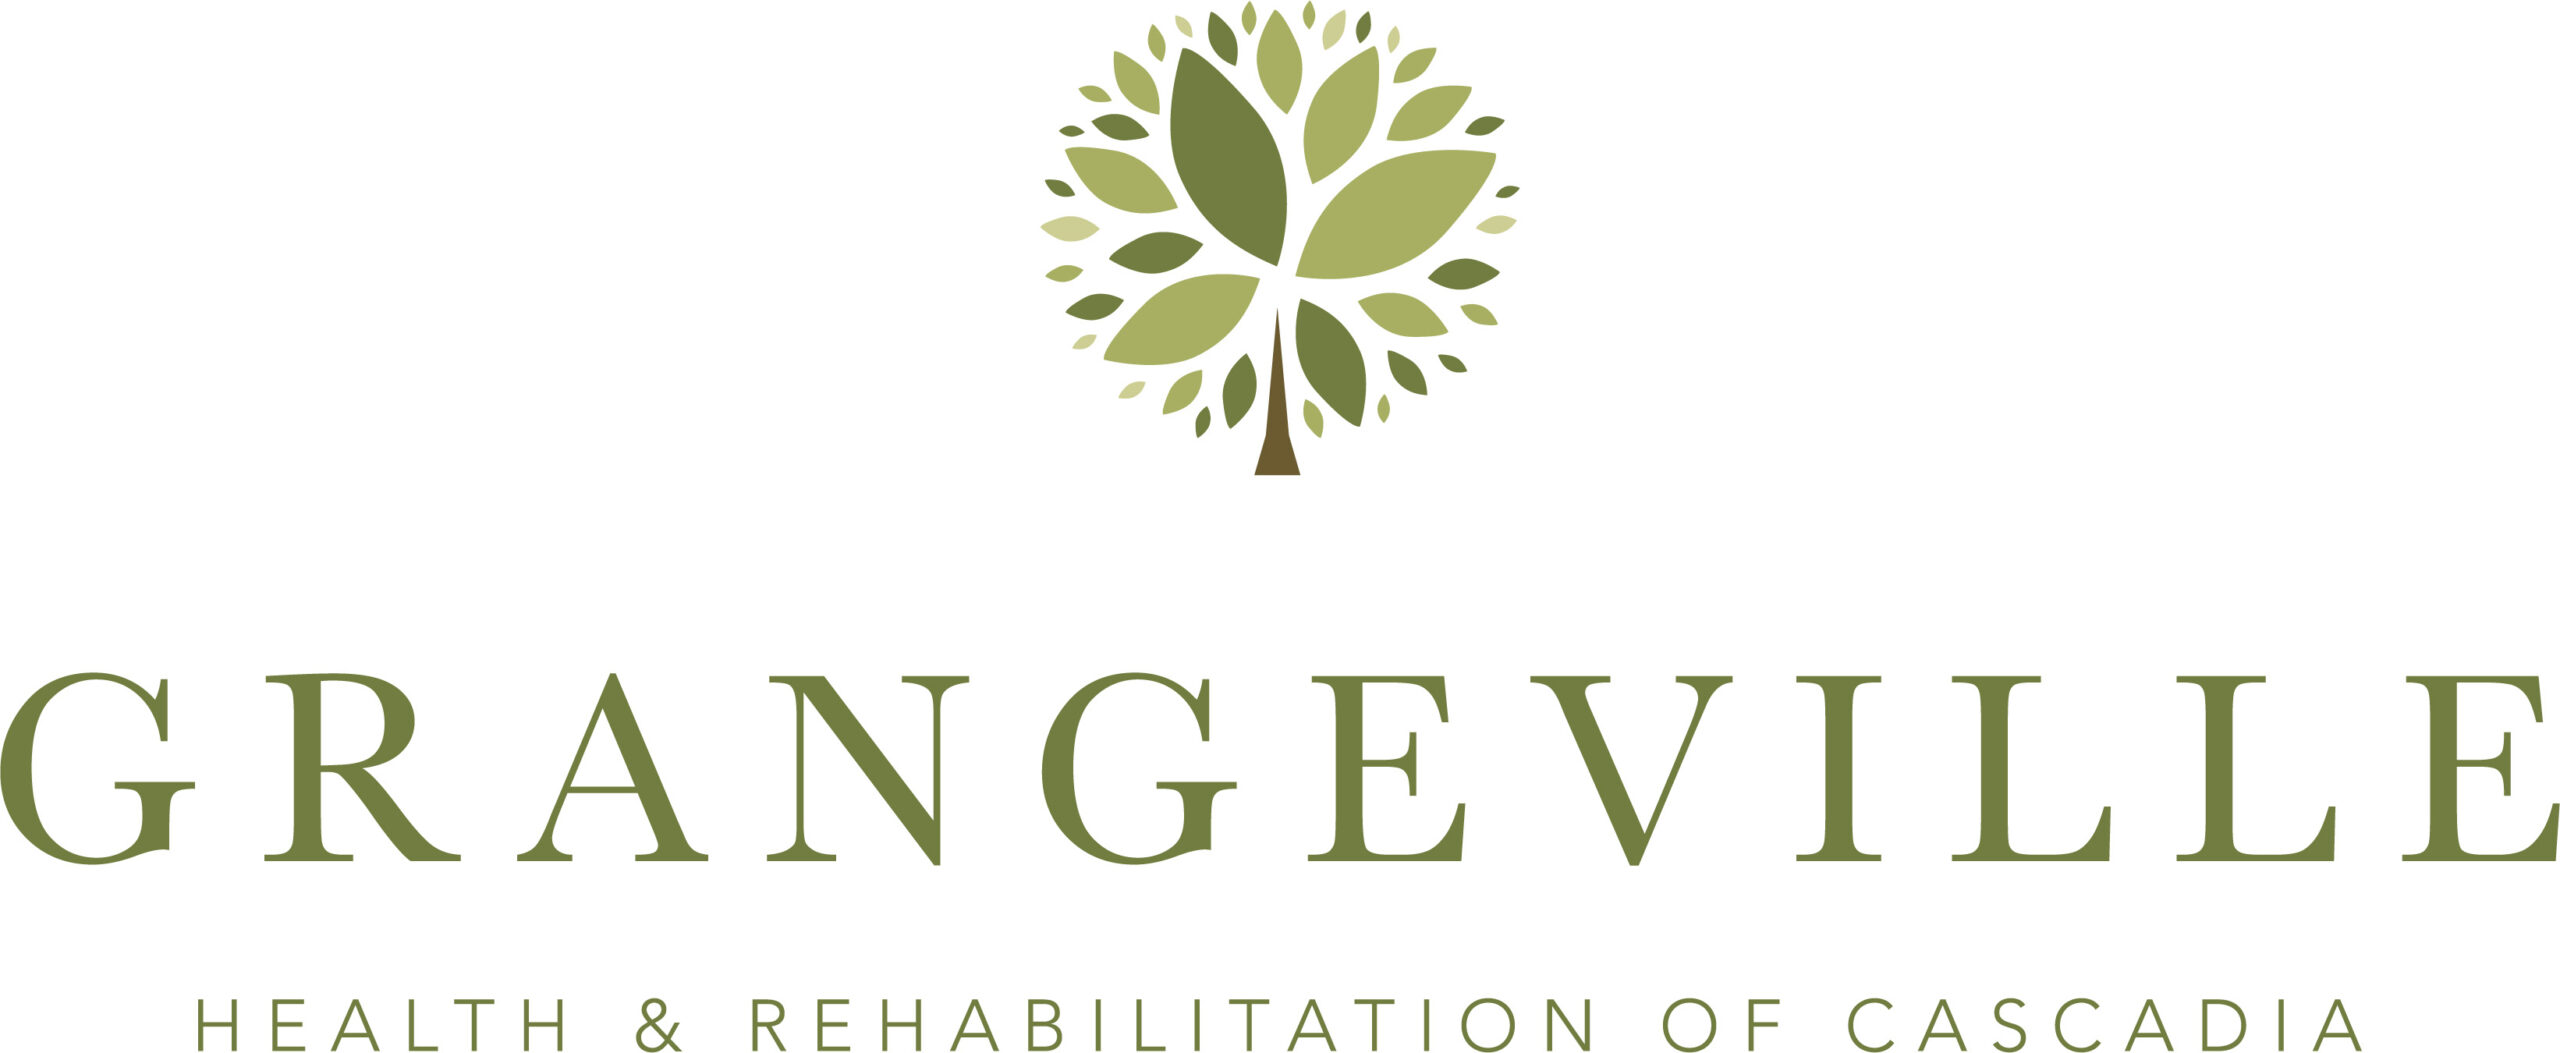 Grangeville Health and Rehabilitation of Cascadia